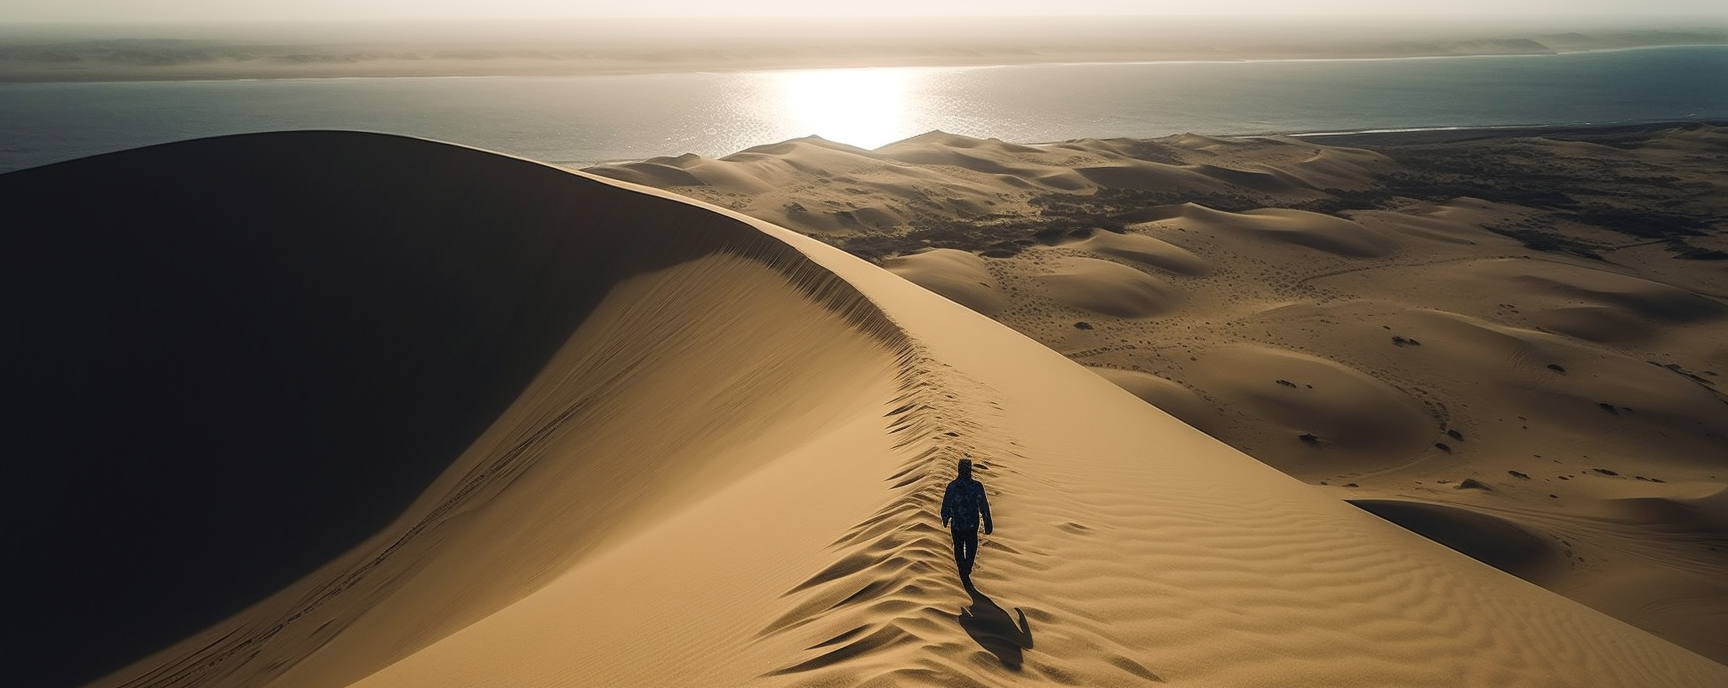 Tycho_Dreq_an_arab_nomad_walks_along_the_crest_of_a_sand_dune_b_2405831e-6557-4c61-8f17-99f5d9ae3a5f1[1].png